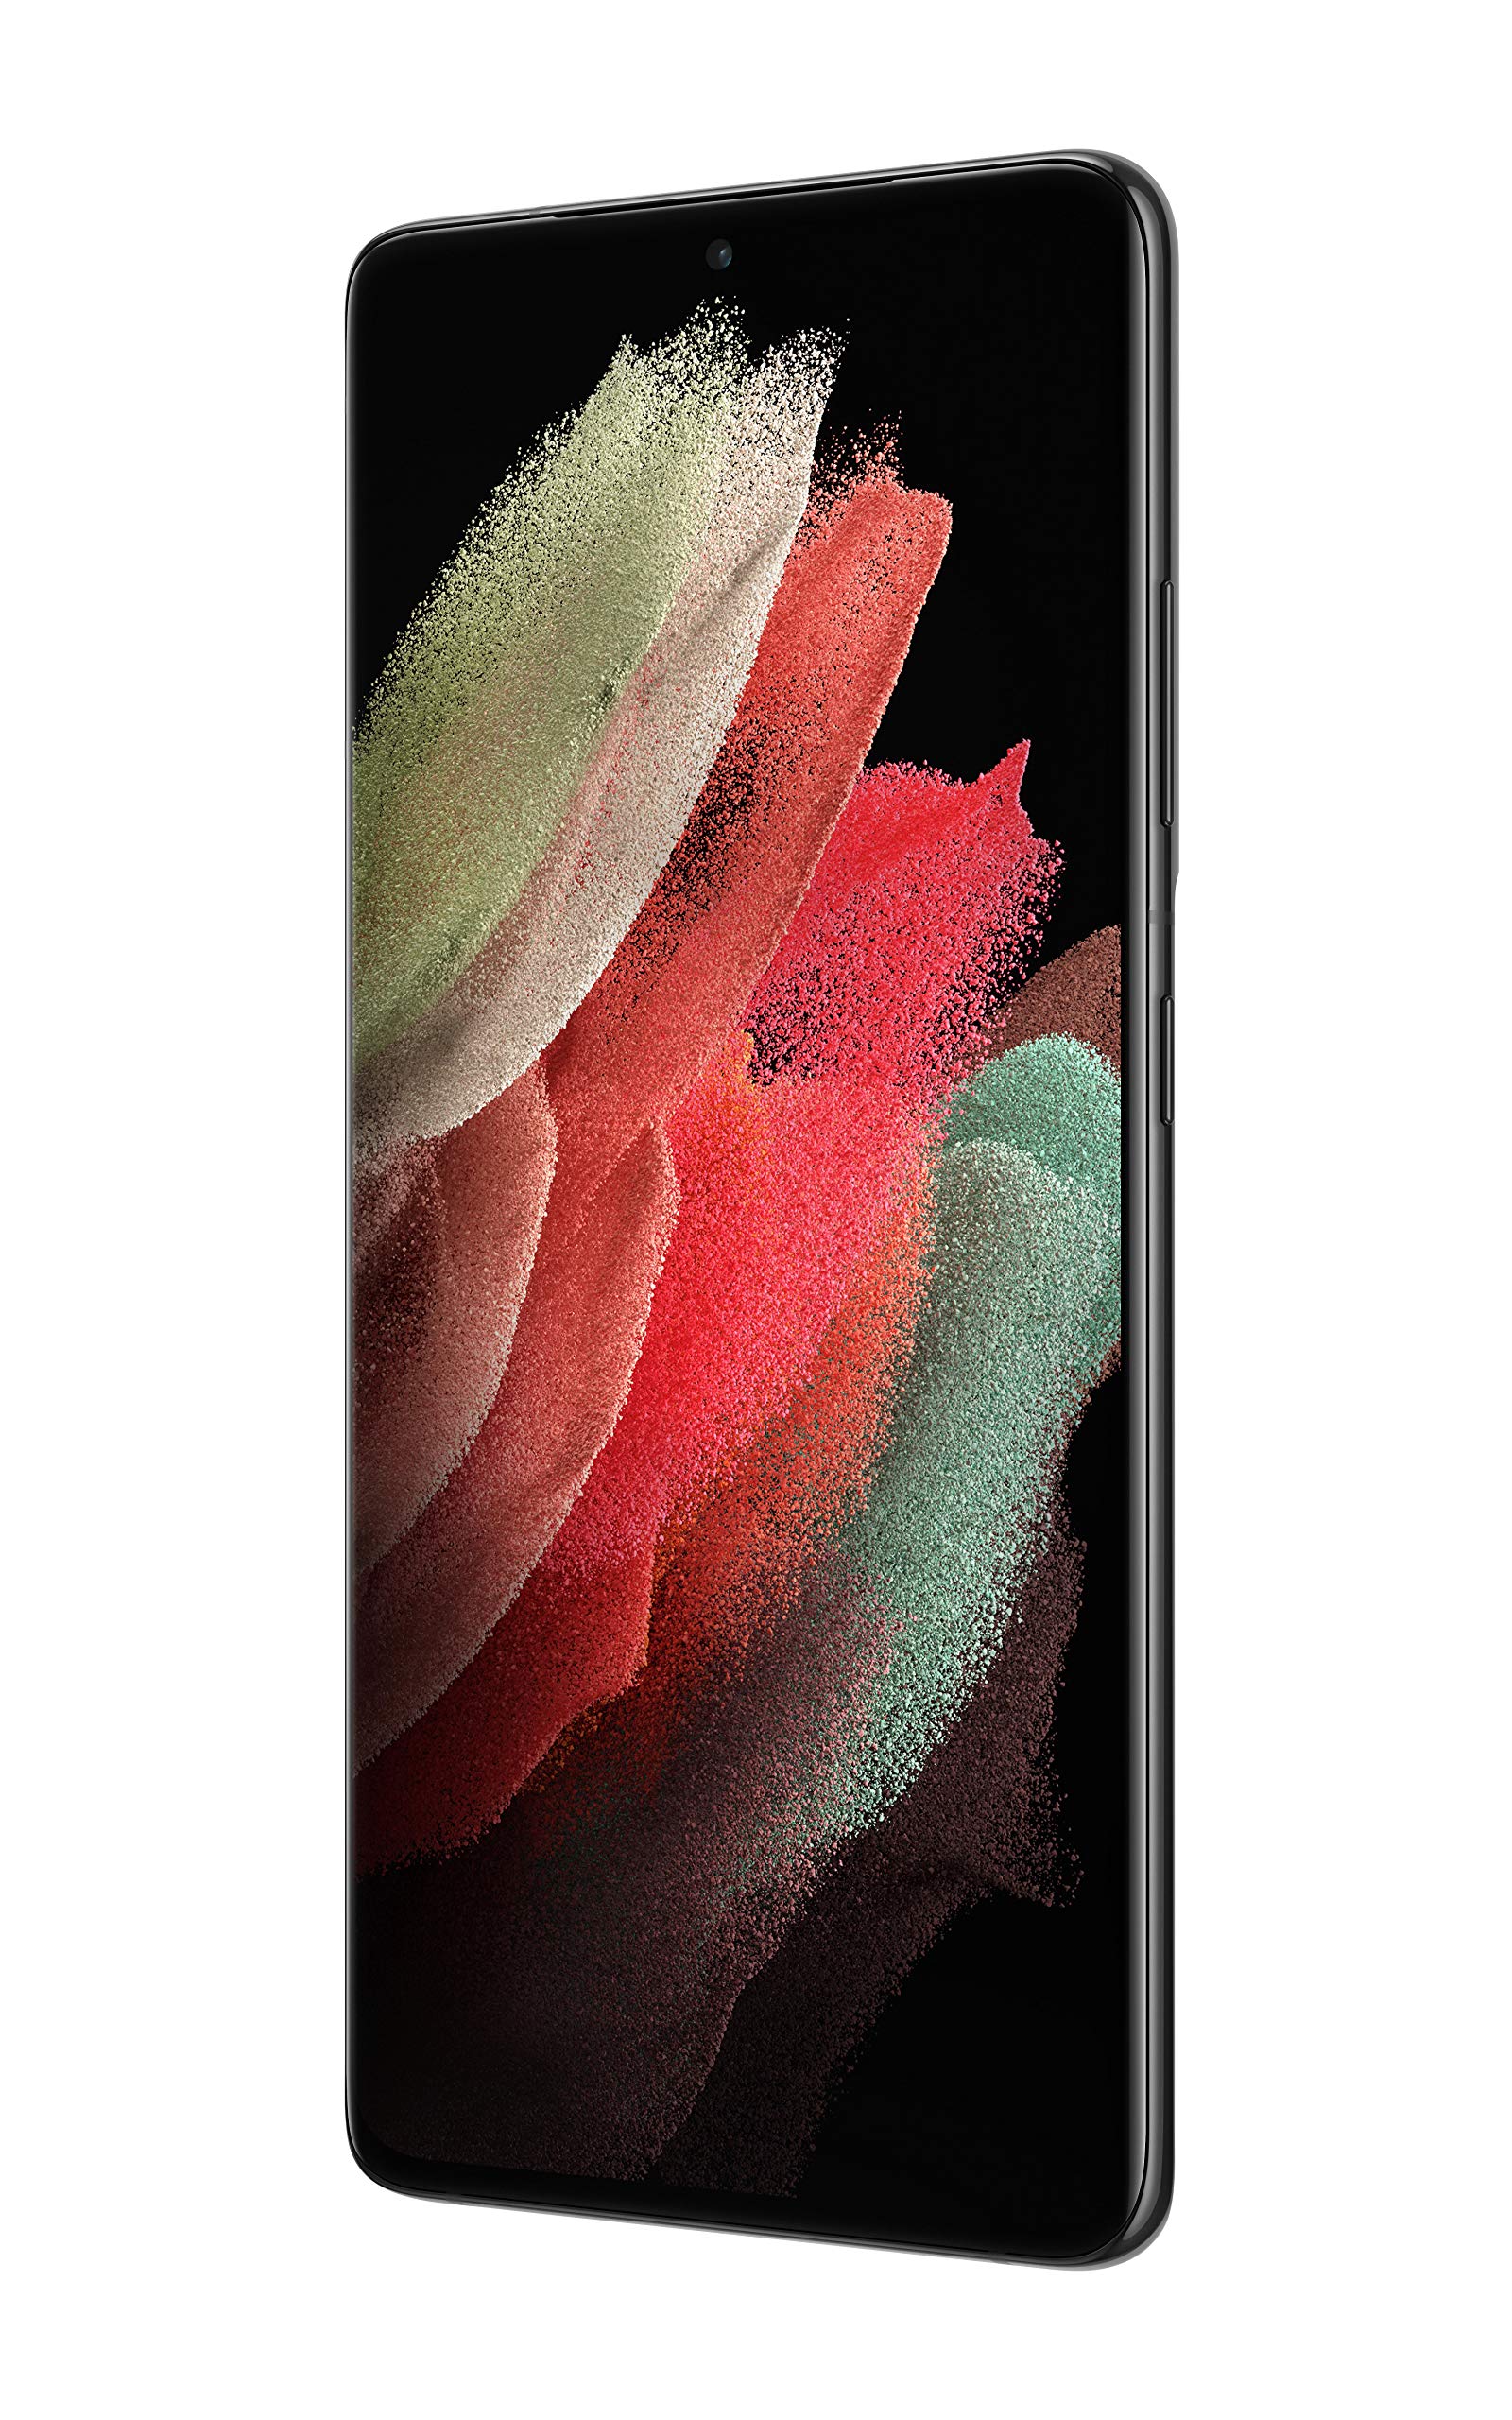 SAMSUNG Galaxy S21 Ultra 5G Factory Unlocked Android Cell Phone 256GB US Version Smartphone Pro-Grade Camera 8K Video 108MP High Res, Phantom Black